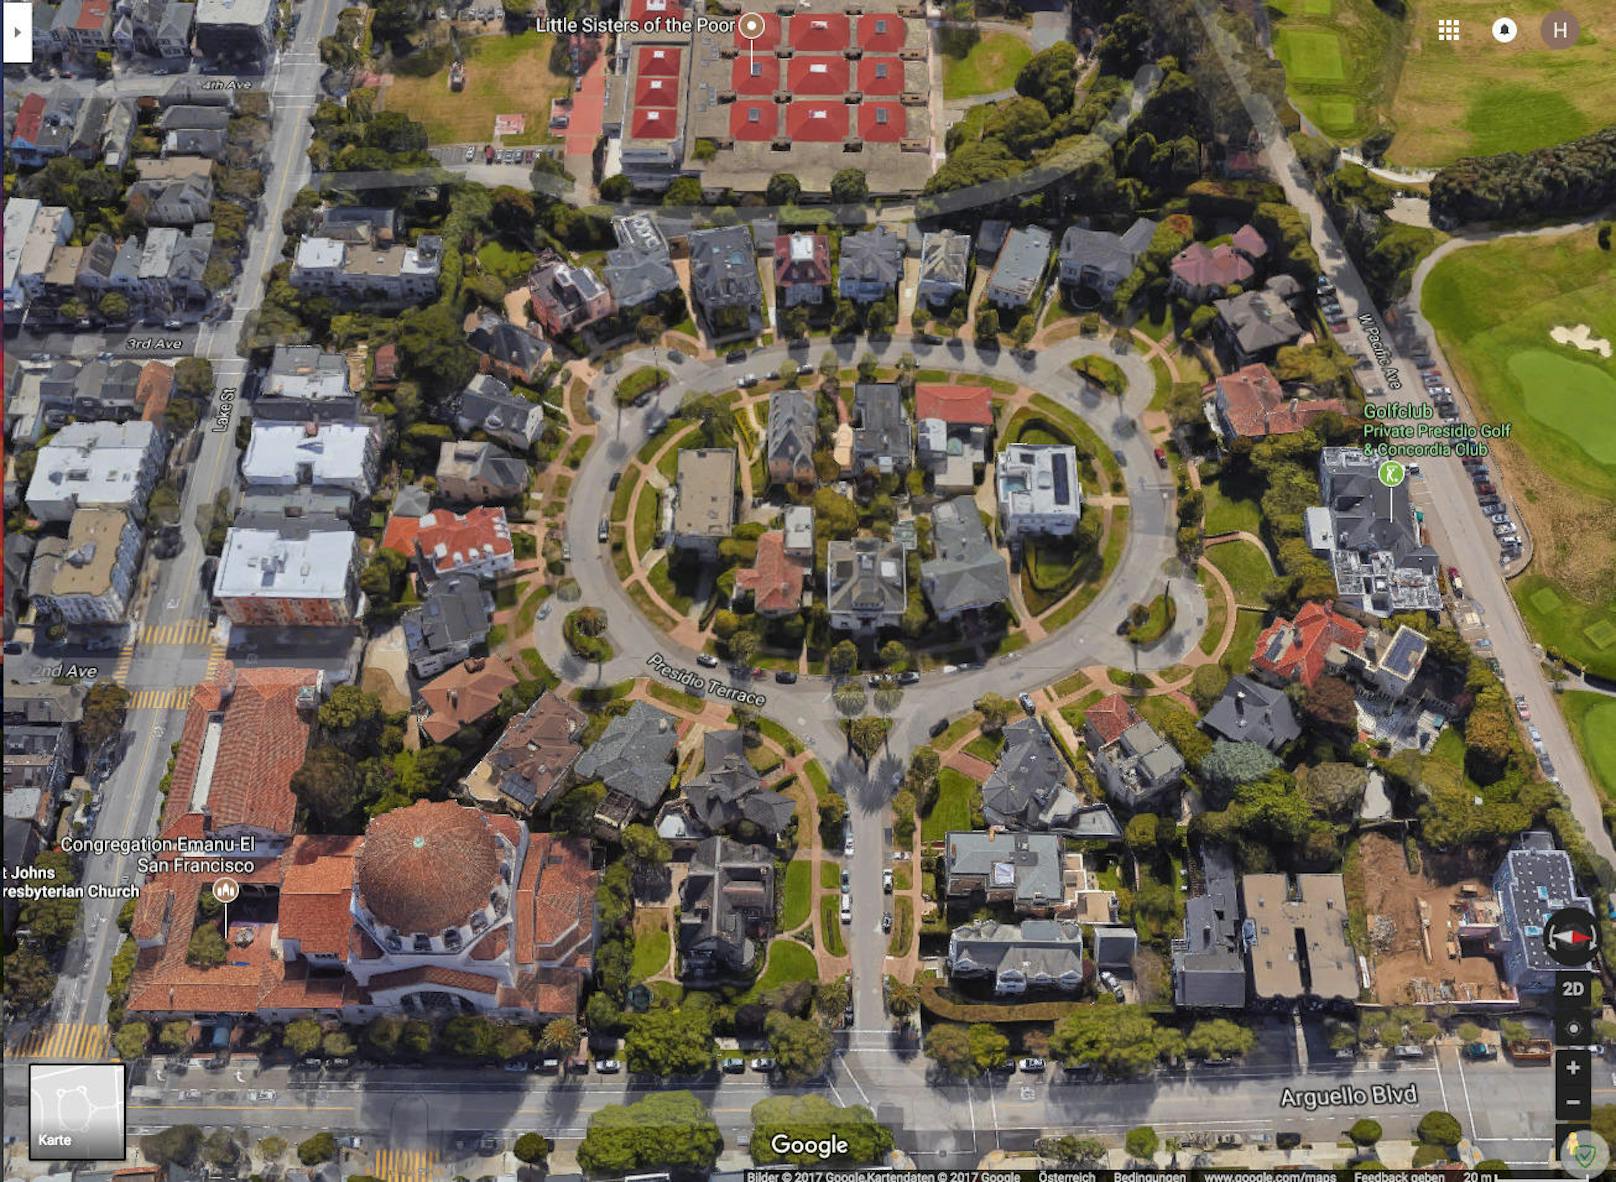 Die ringförmige "Presidio Terrace" in San Francisco